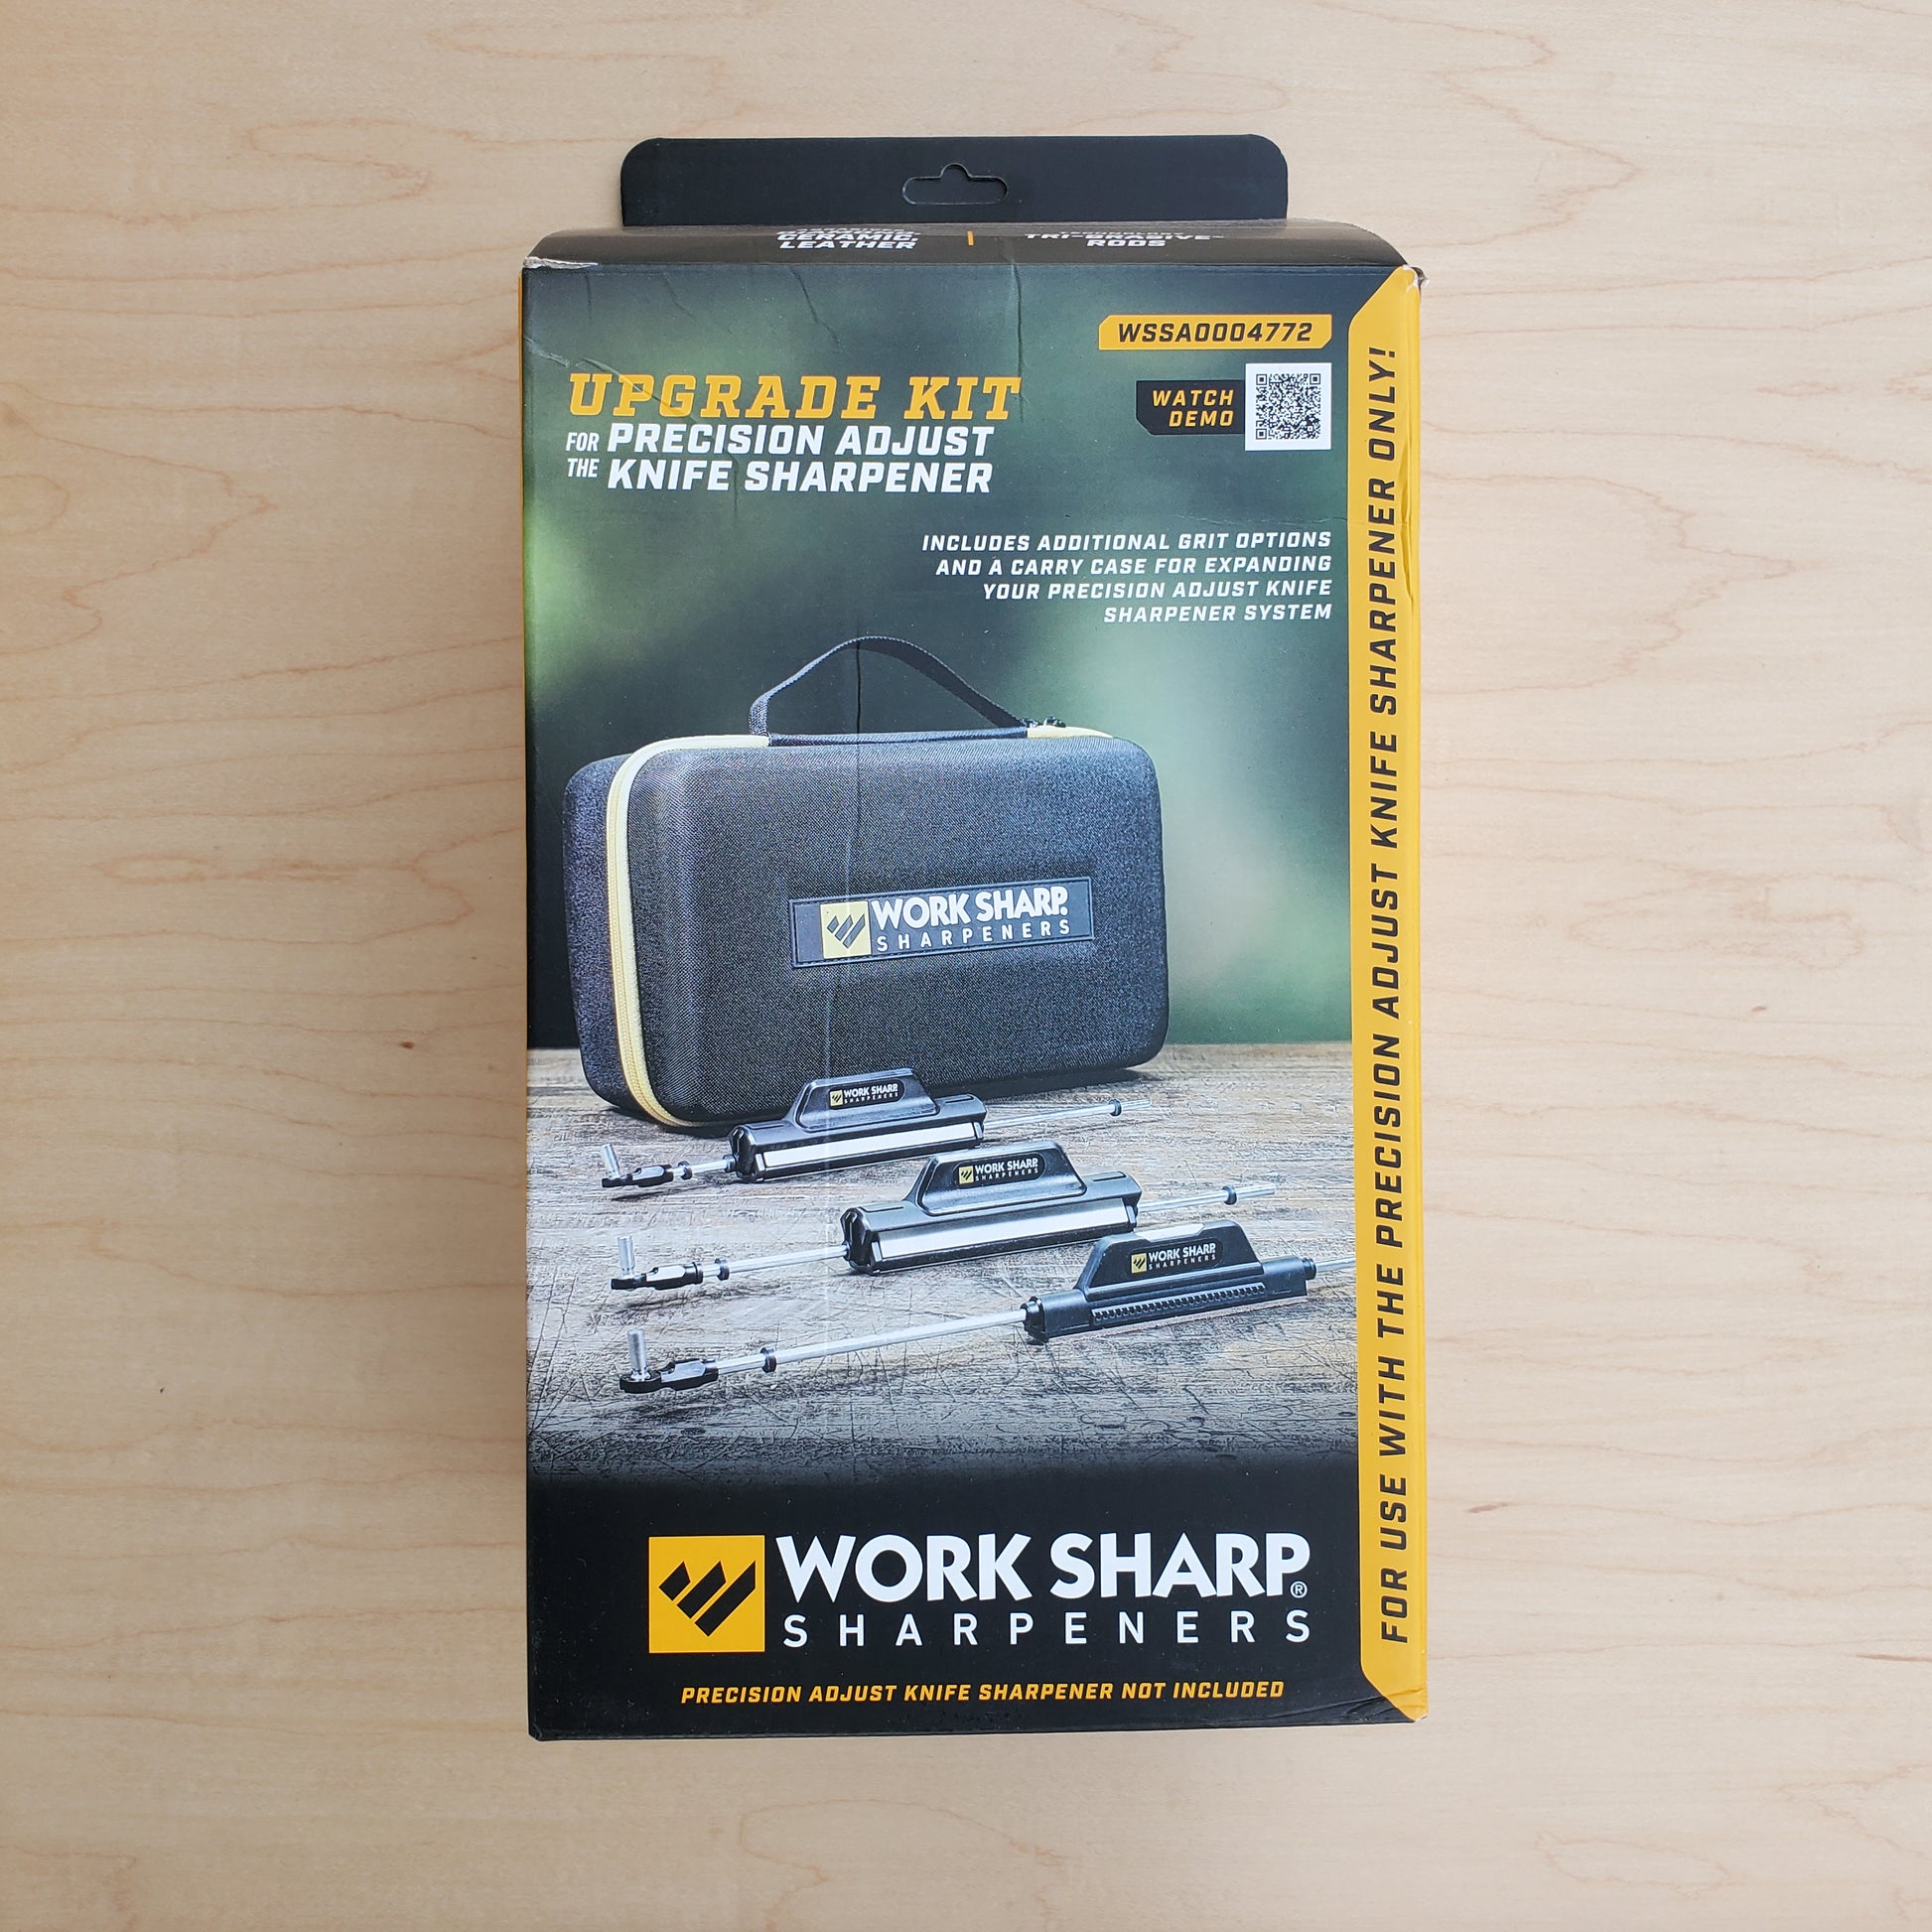 Work Sharp Guided Sharpening System - Upgrade Kit - Blade HQ